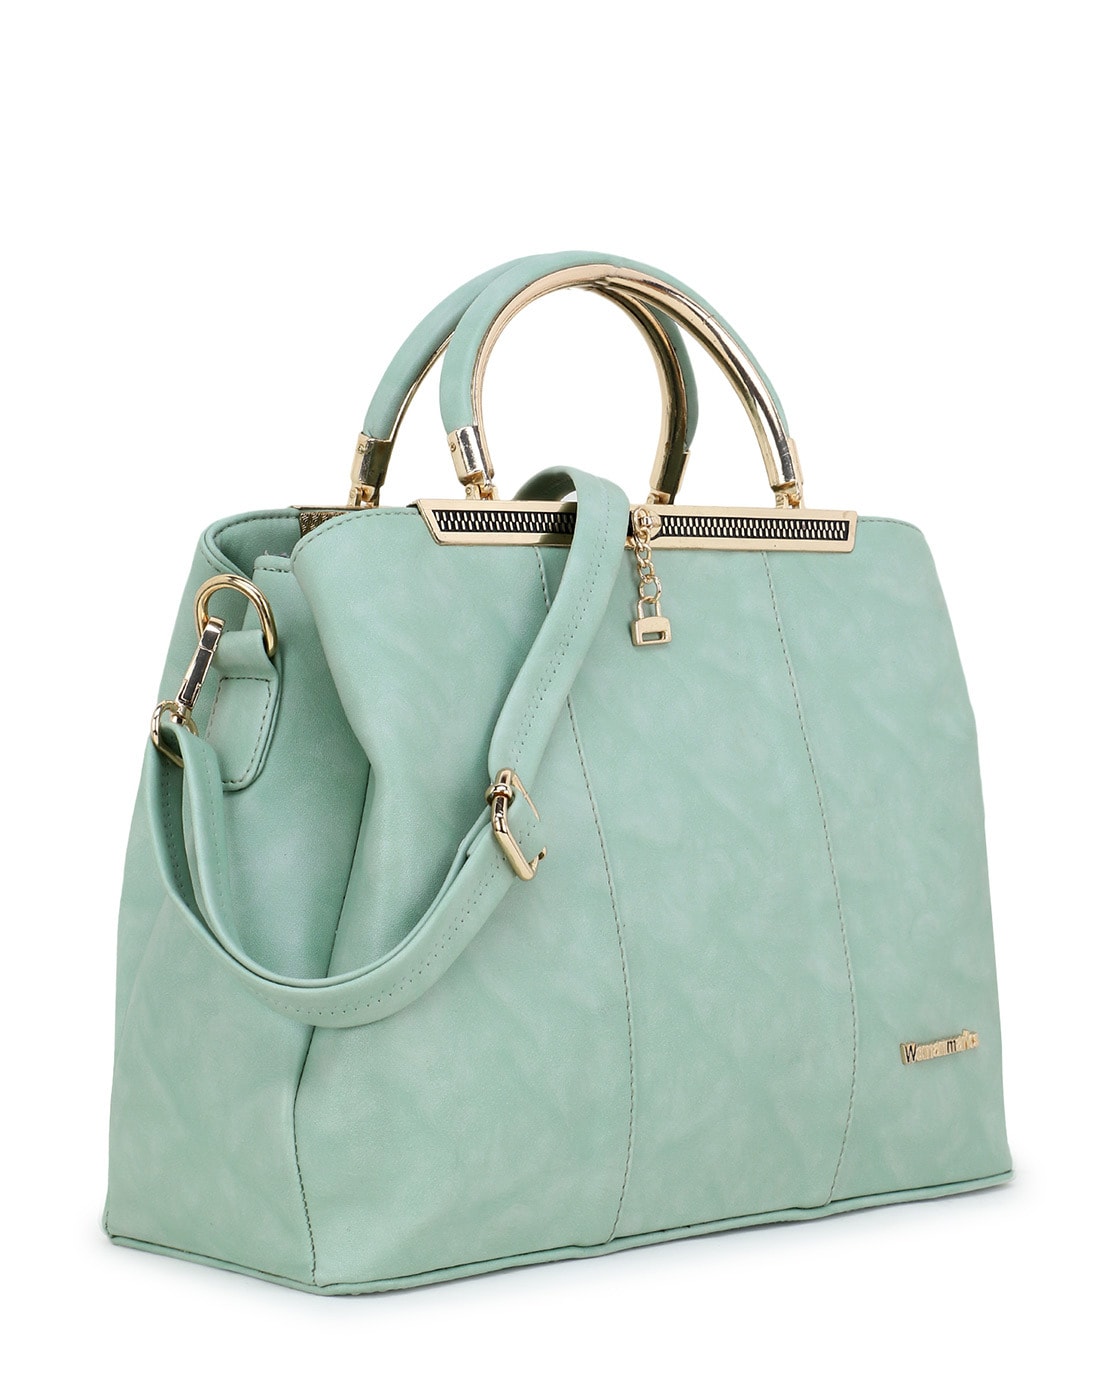 Buy Blue Handbags for Women by Women Marks Online | Ajio.com